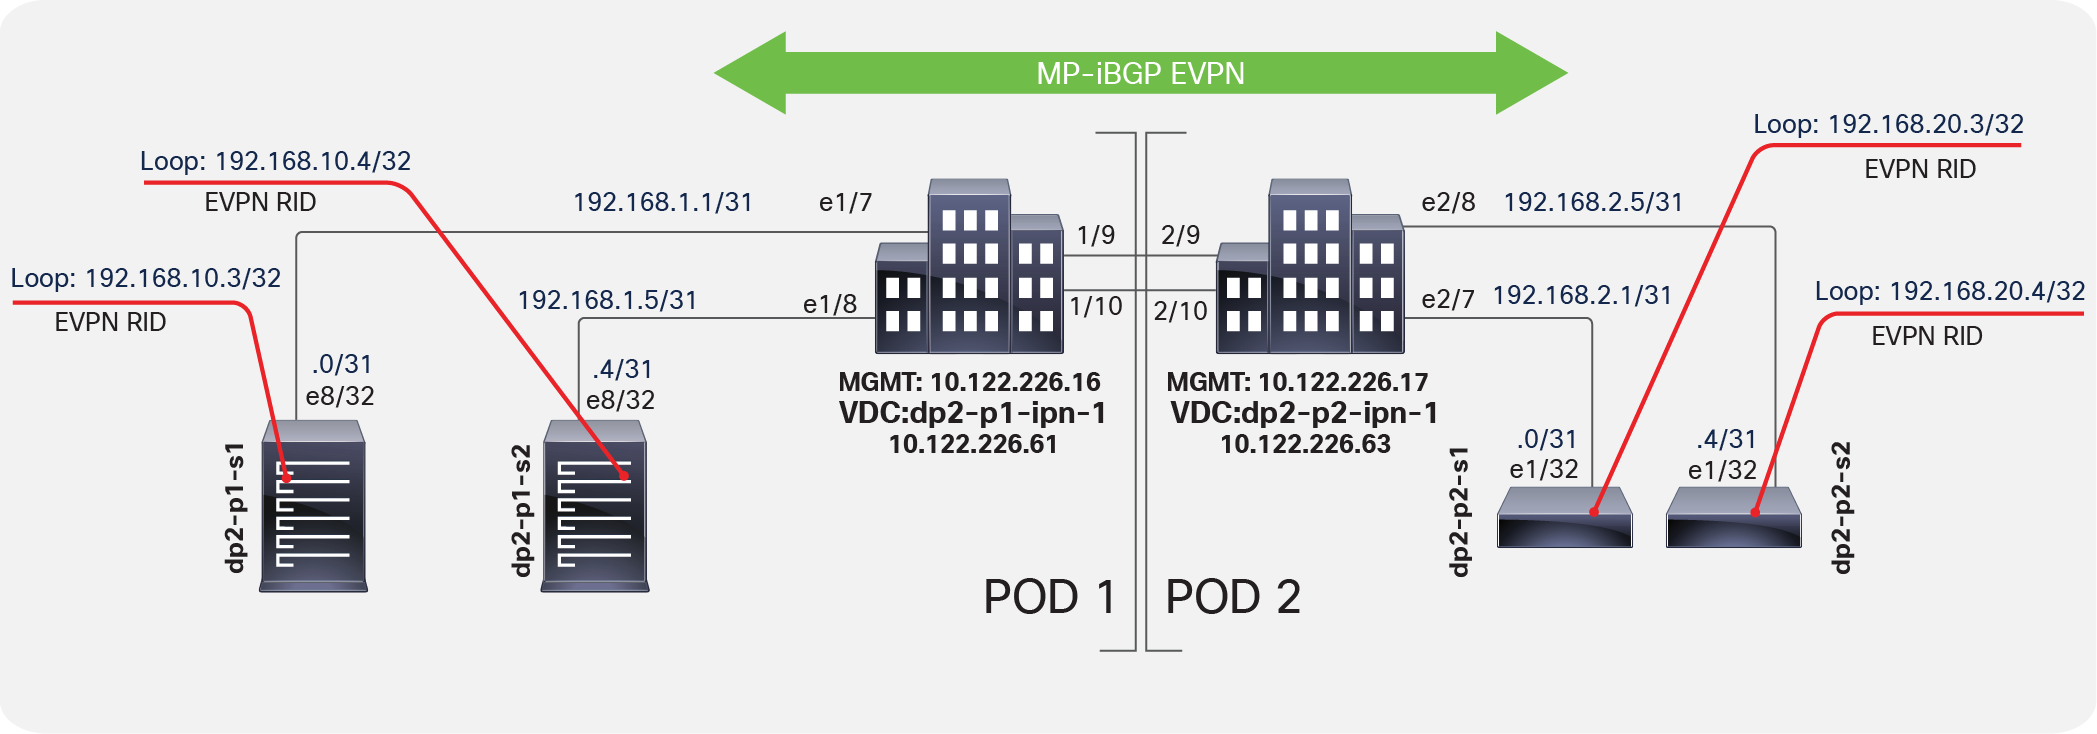 Verifying spine MP-BGP EVPN